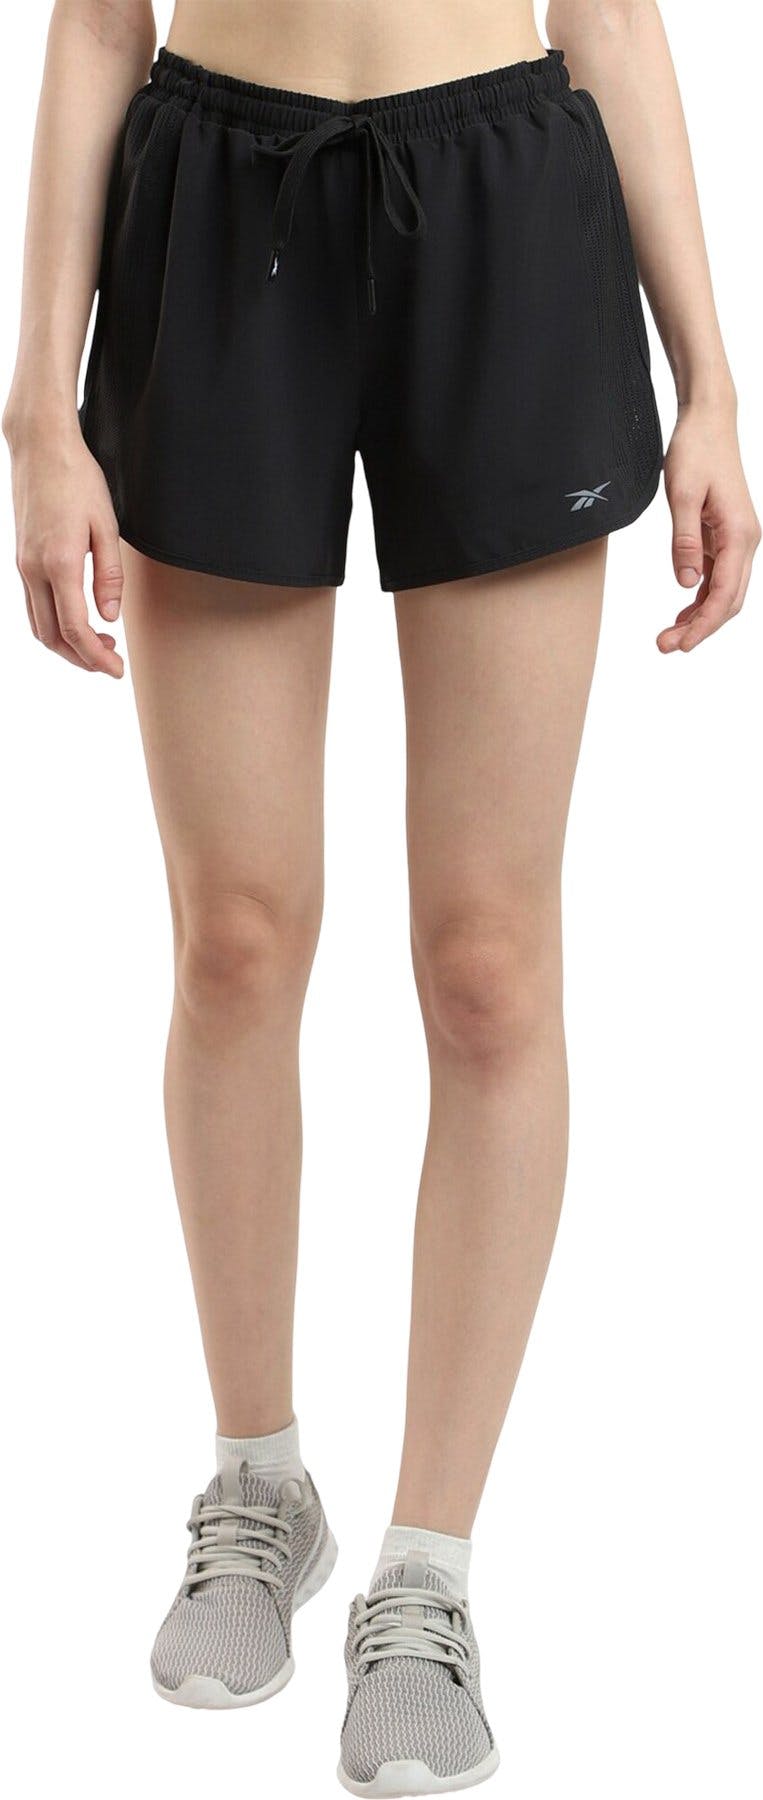 Product image for Athlete Shorts - Women's